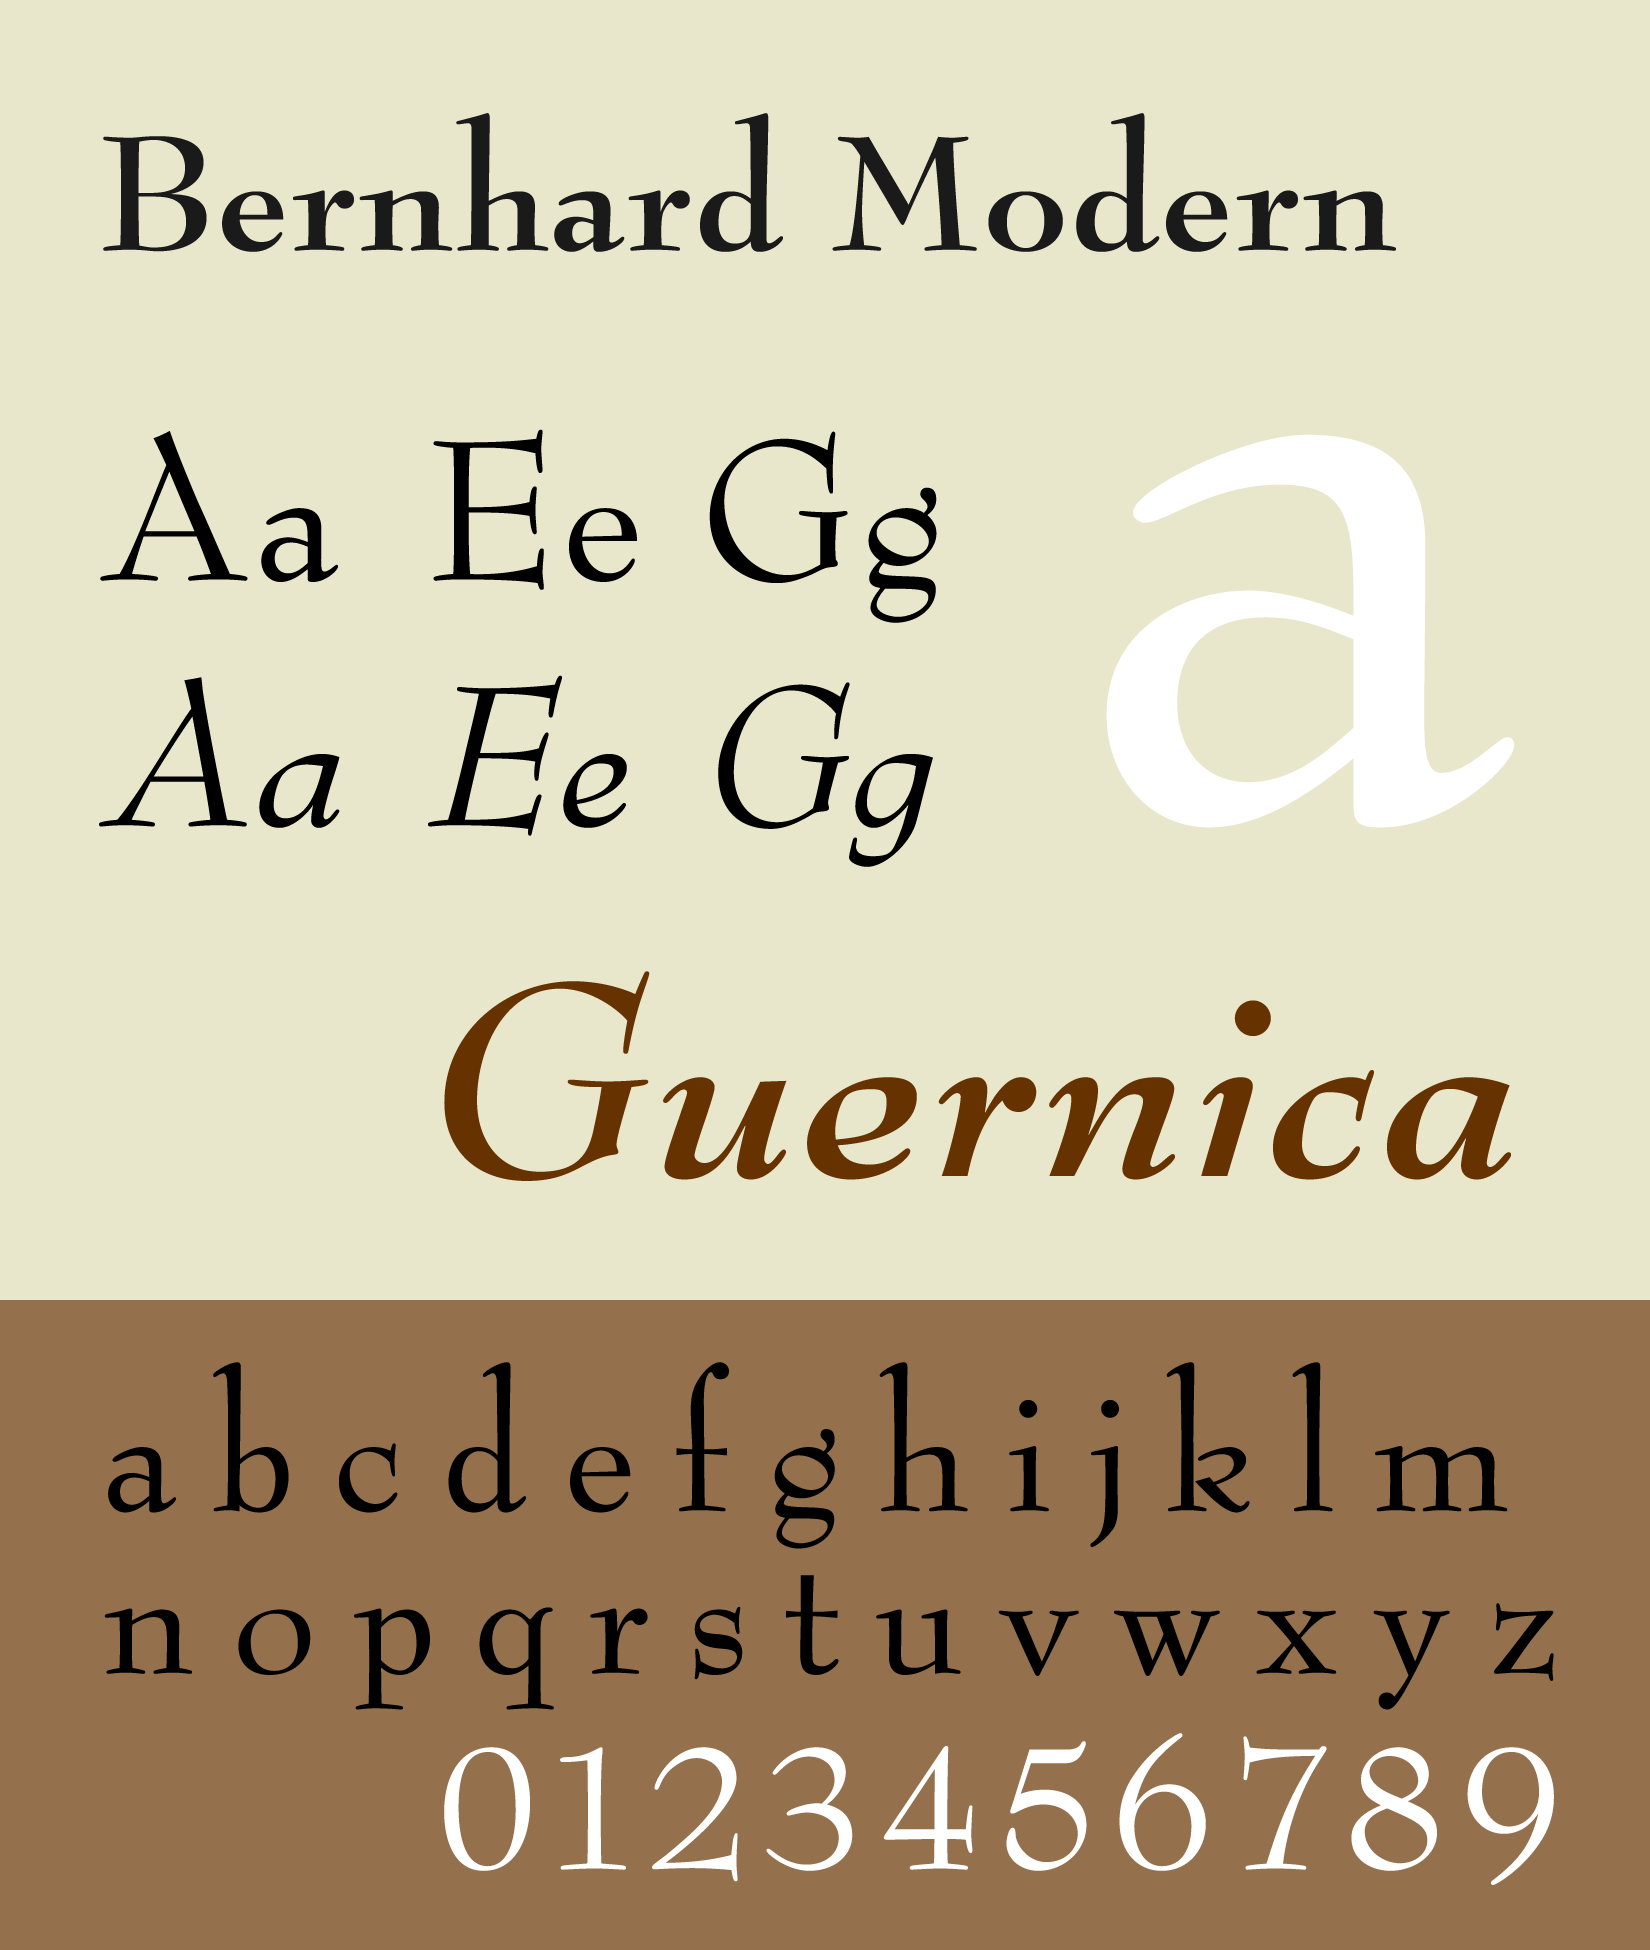 bernhard modern font free download mac